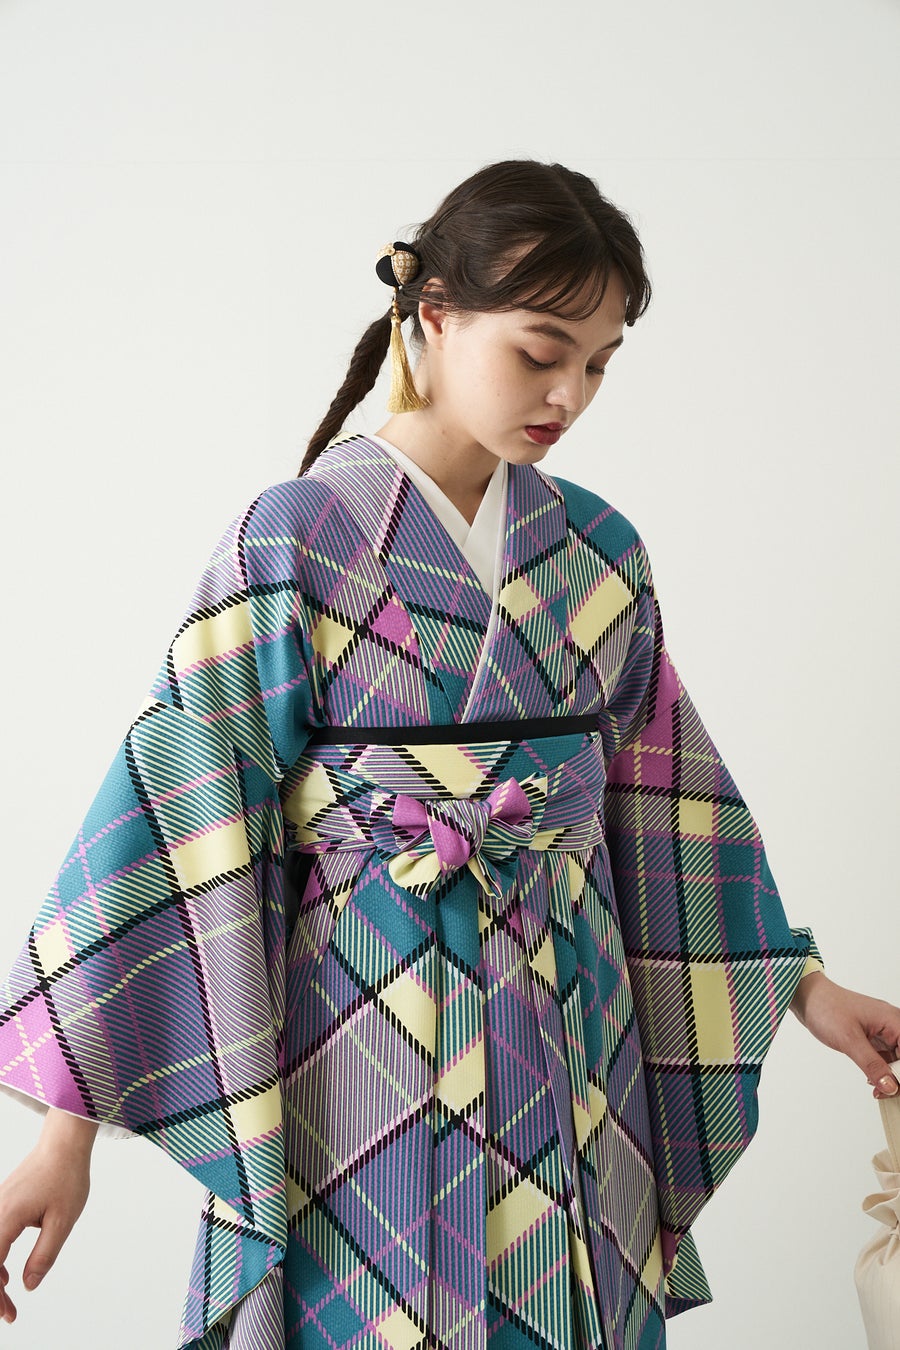 KIMONO by NADESHIKO＞マドラスチェックの袴を加えた新作「わたしの